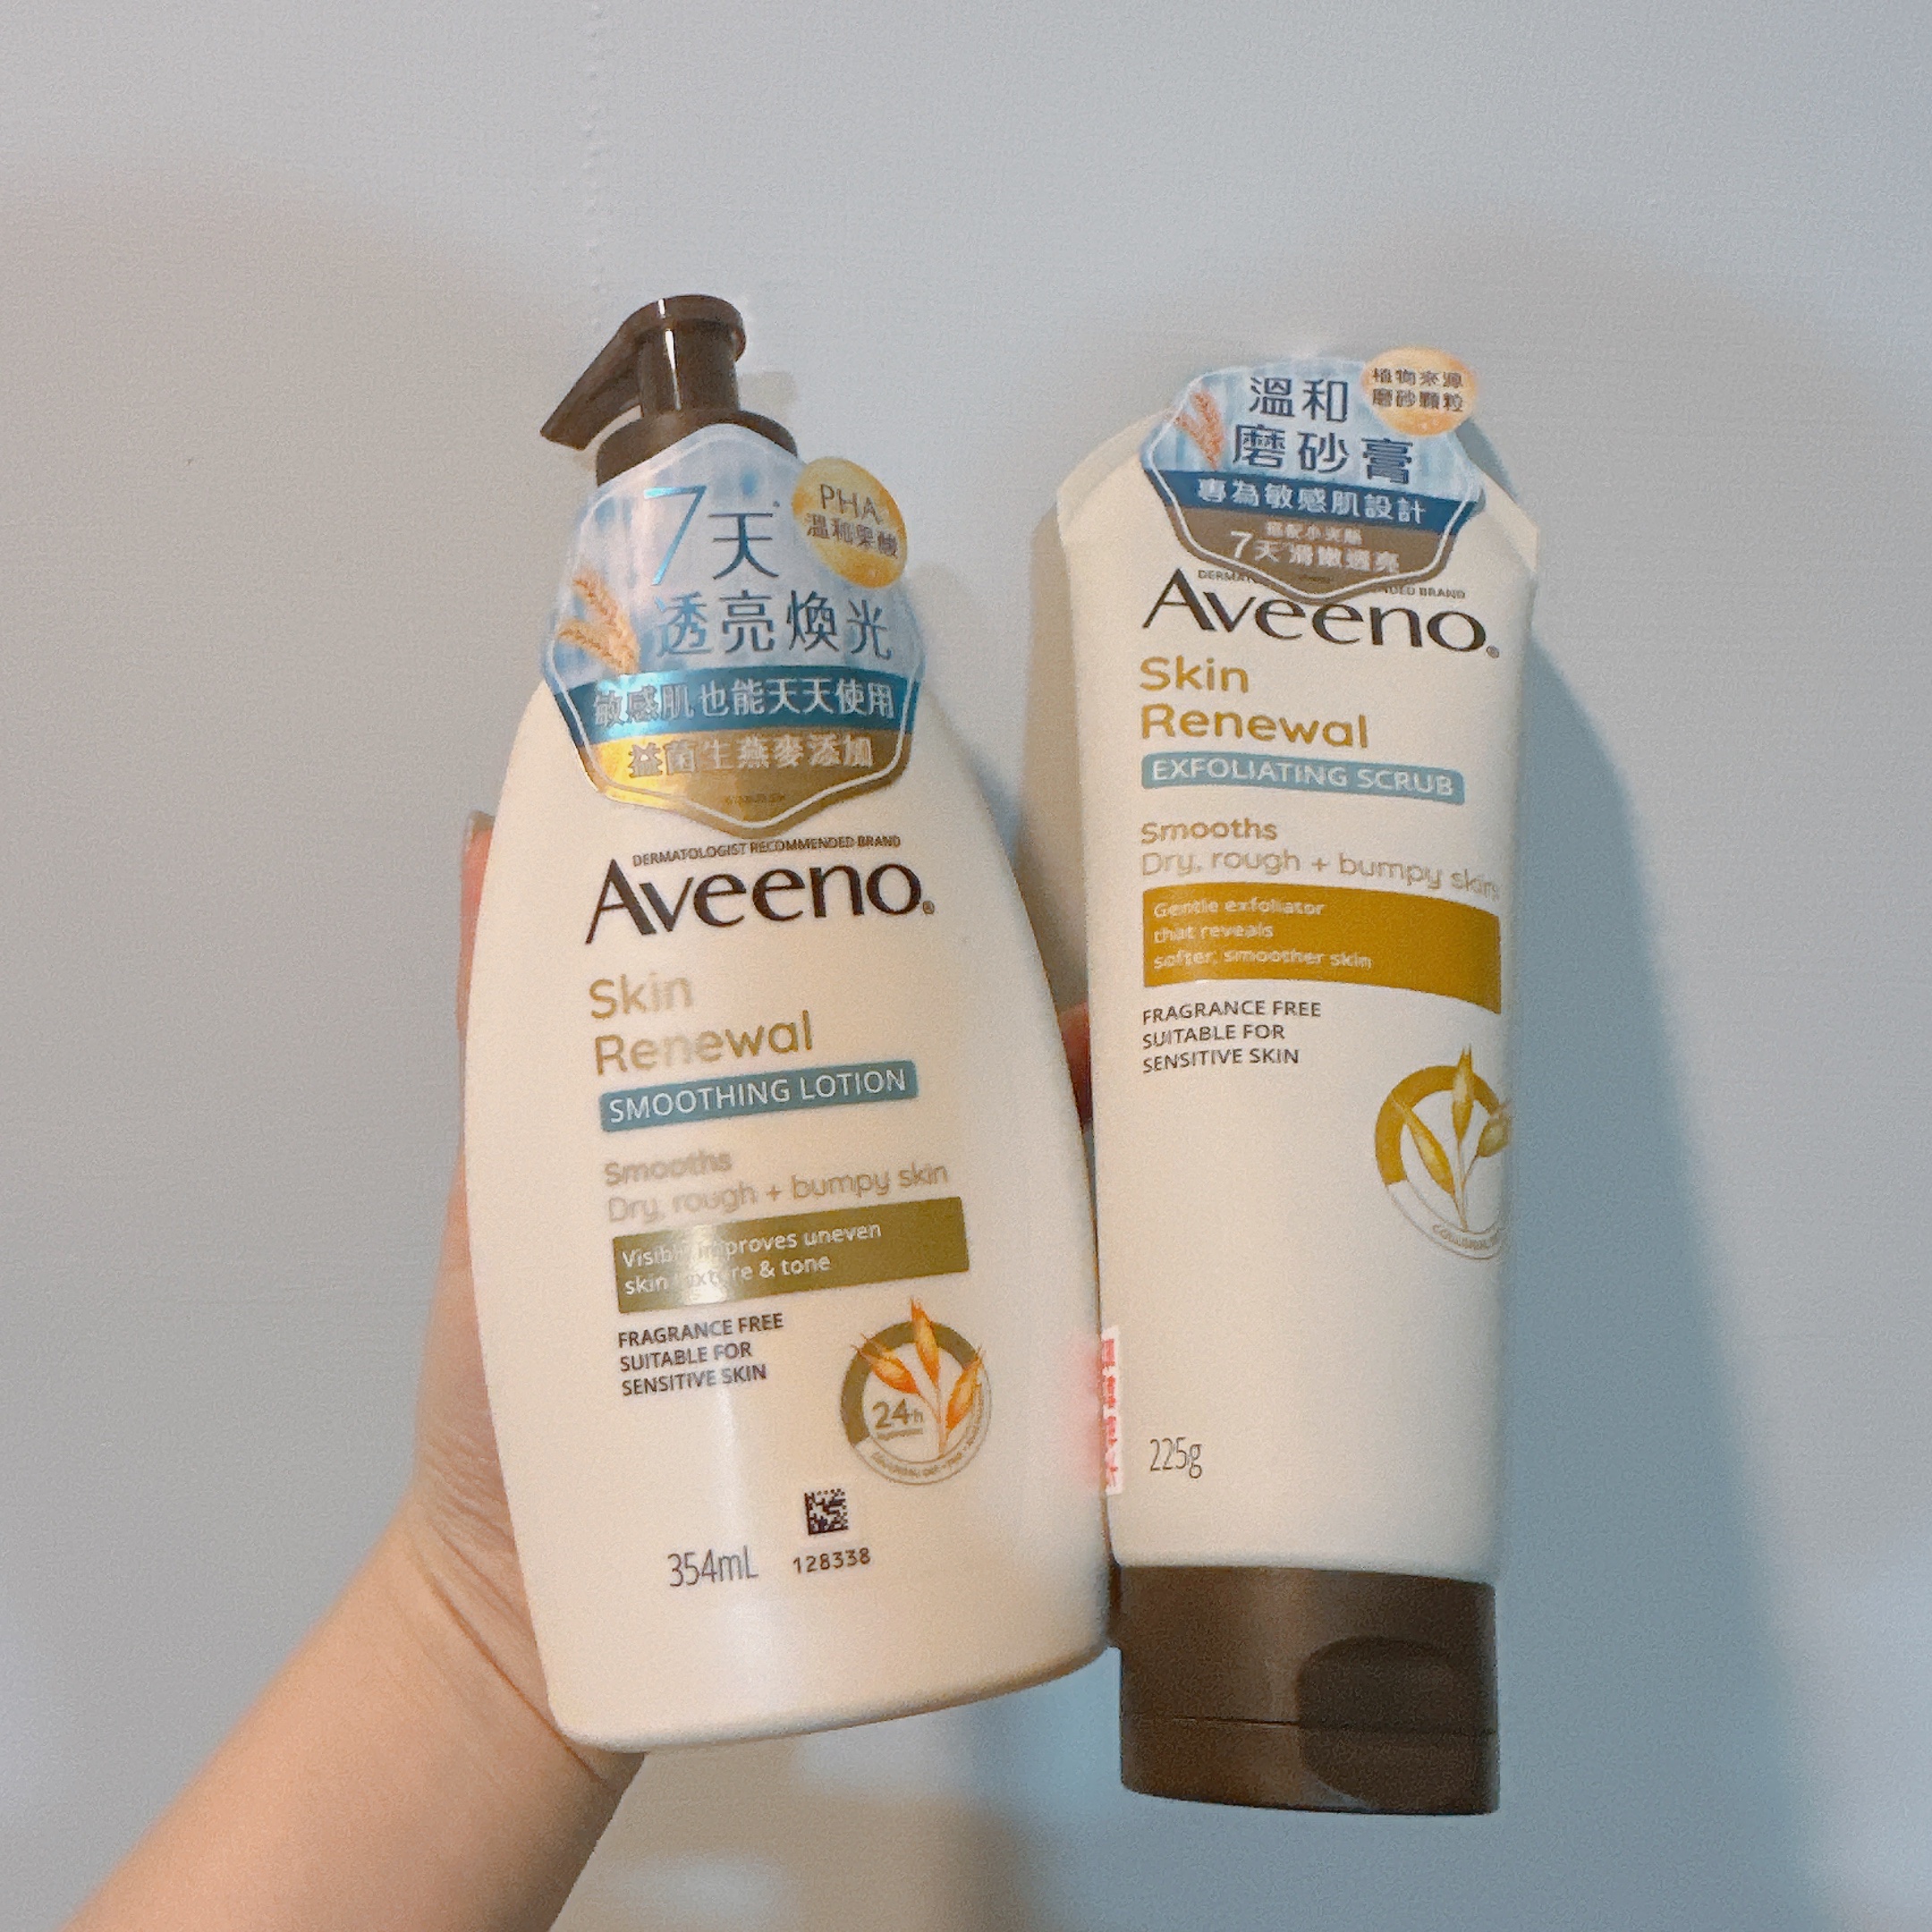 Aveeno艾惟諾「小光瓶」燕麥煥光奇肌保濕乳+磨砂膏是一款質地柔滑、功效明顯、溫和適用的產品